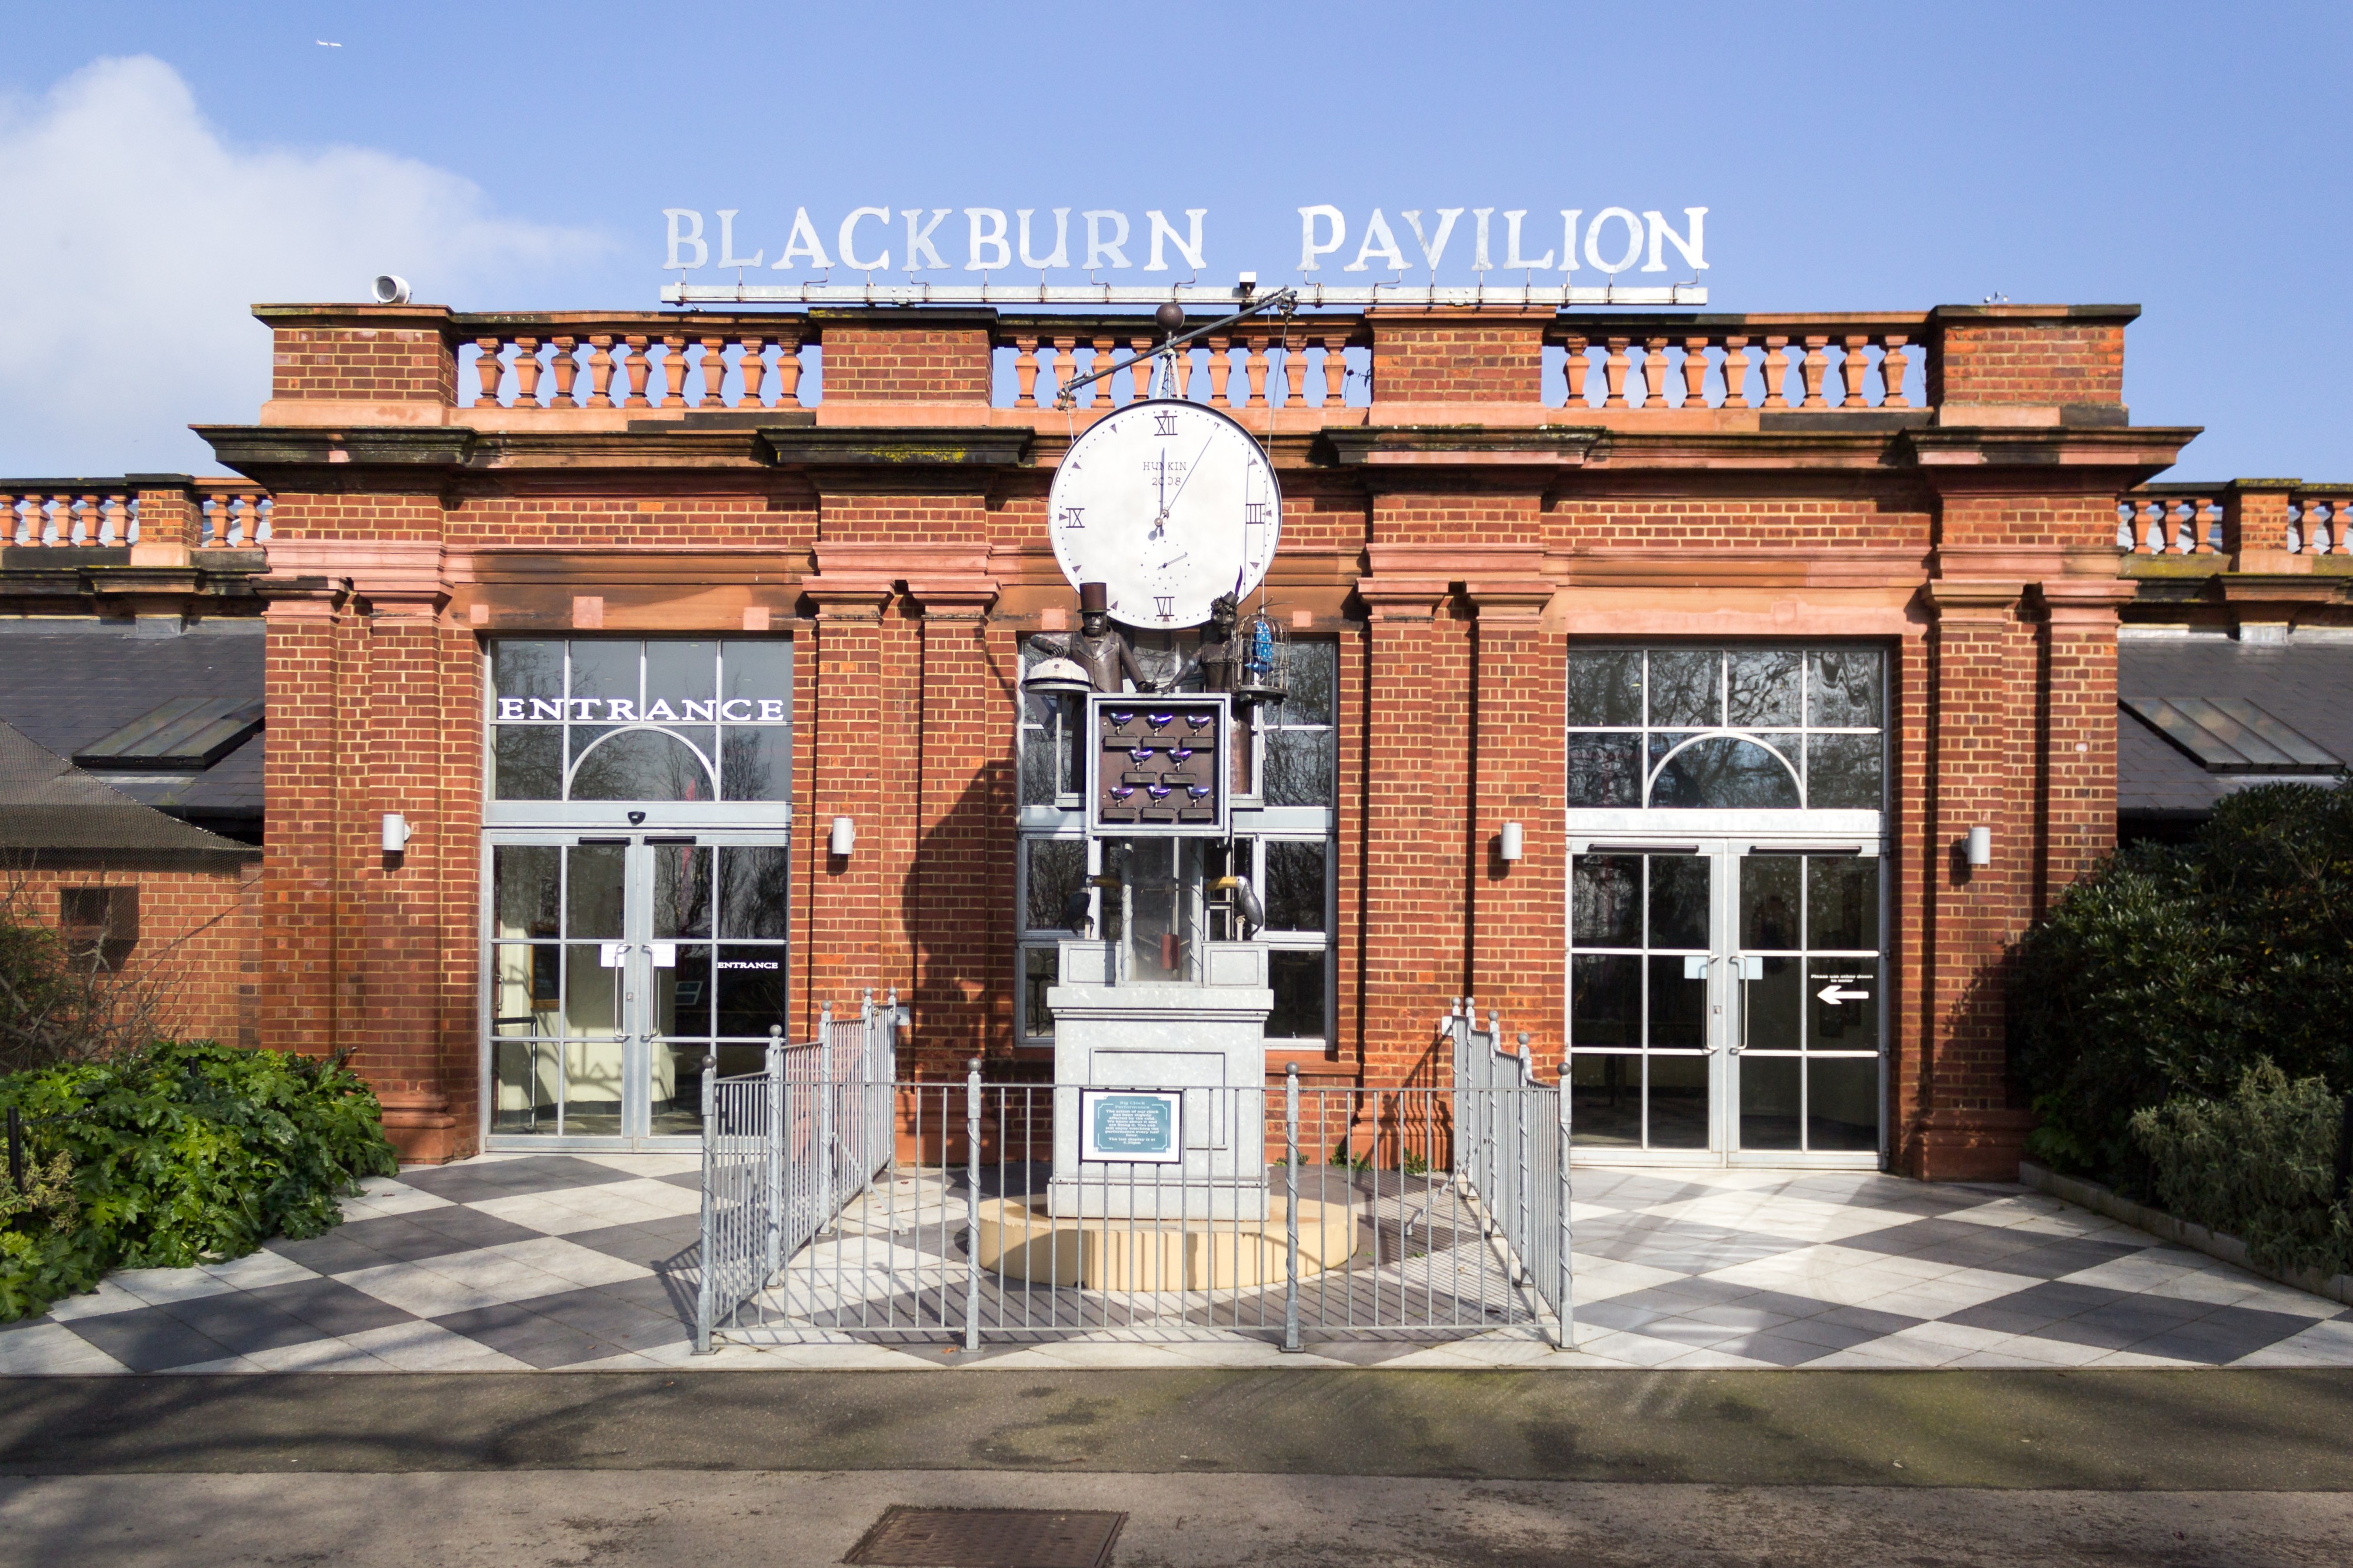 ZSL London - Blackburn Pavilion